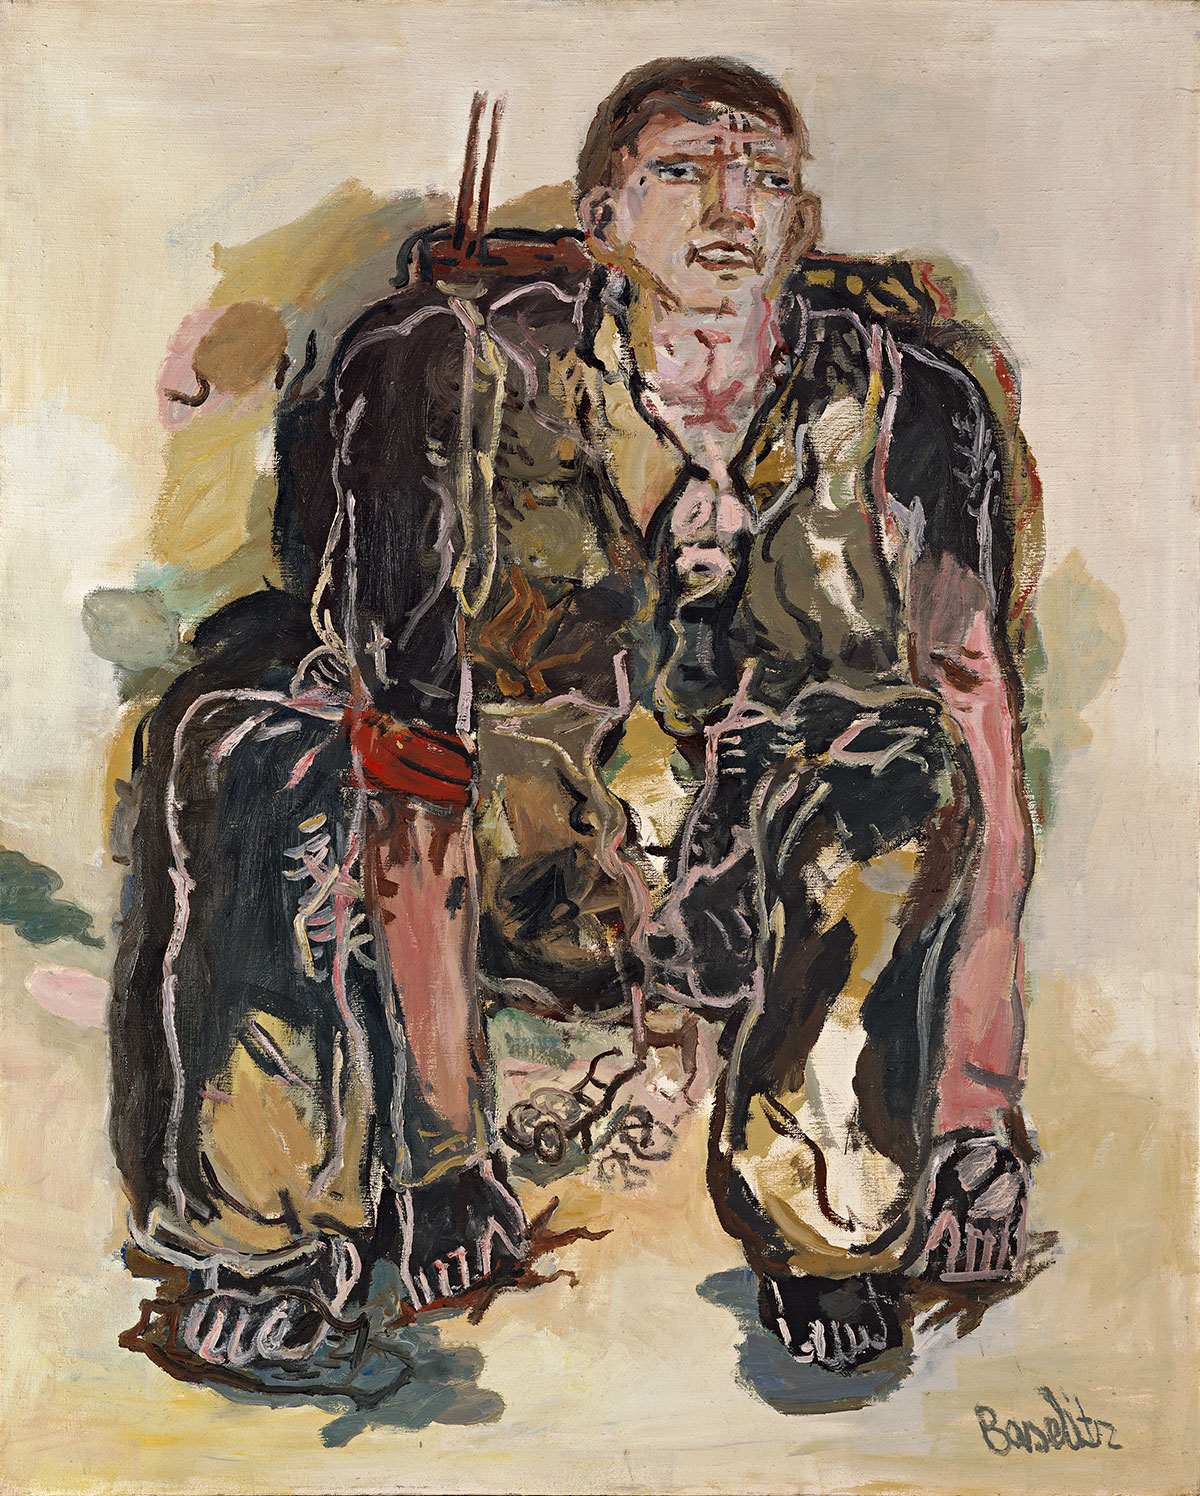 Georg Baselitz The modern painter (Der moderne Maler) , 1965 Oil on canvas 162 x 130 cm
Private collection © Georg Baselitz, 2017 Photo: Frank Oleski, Cologne